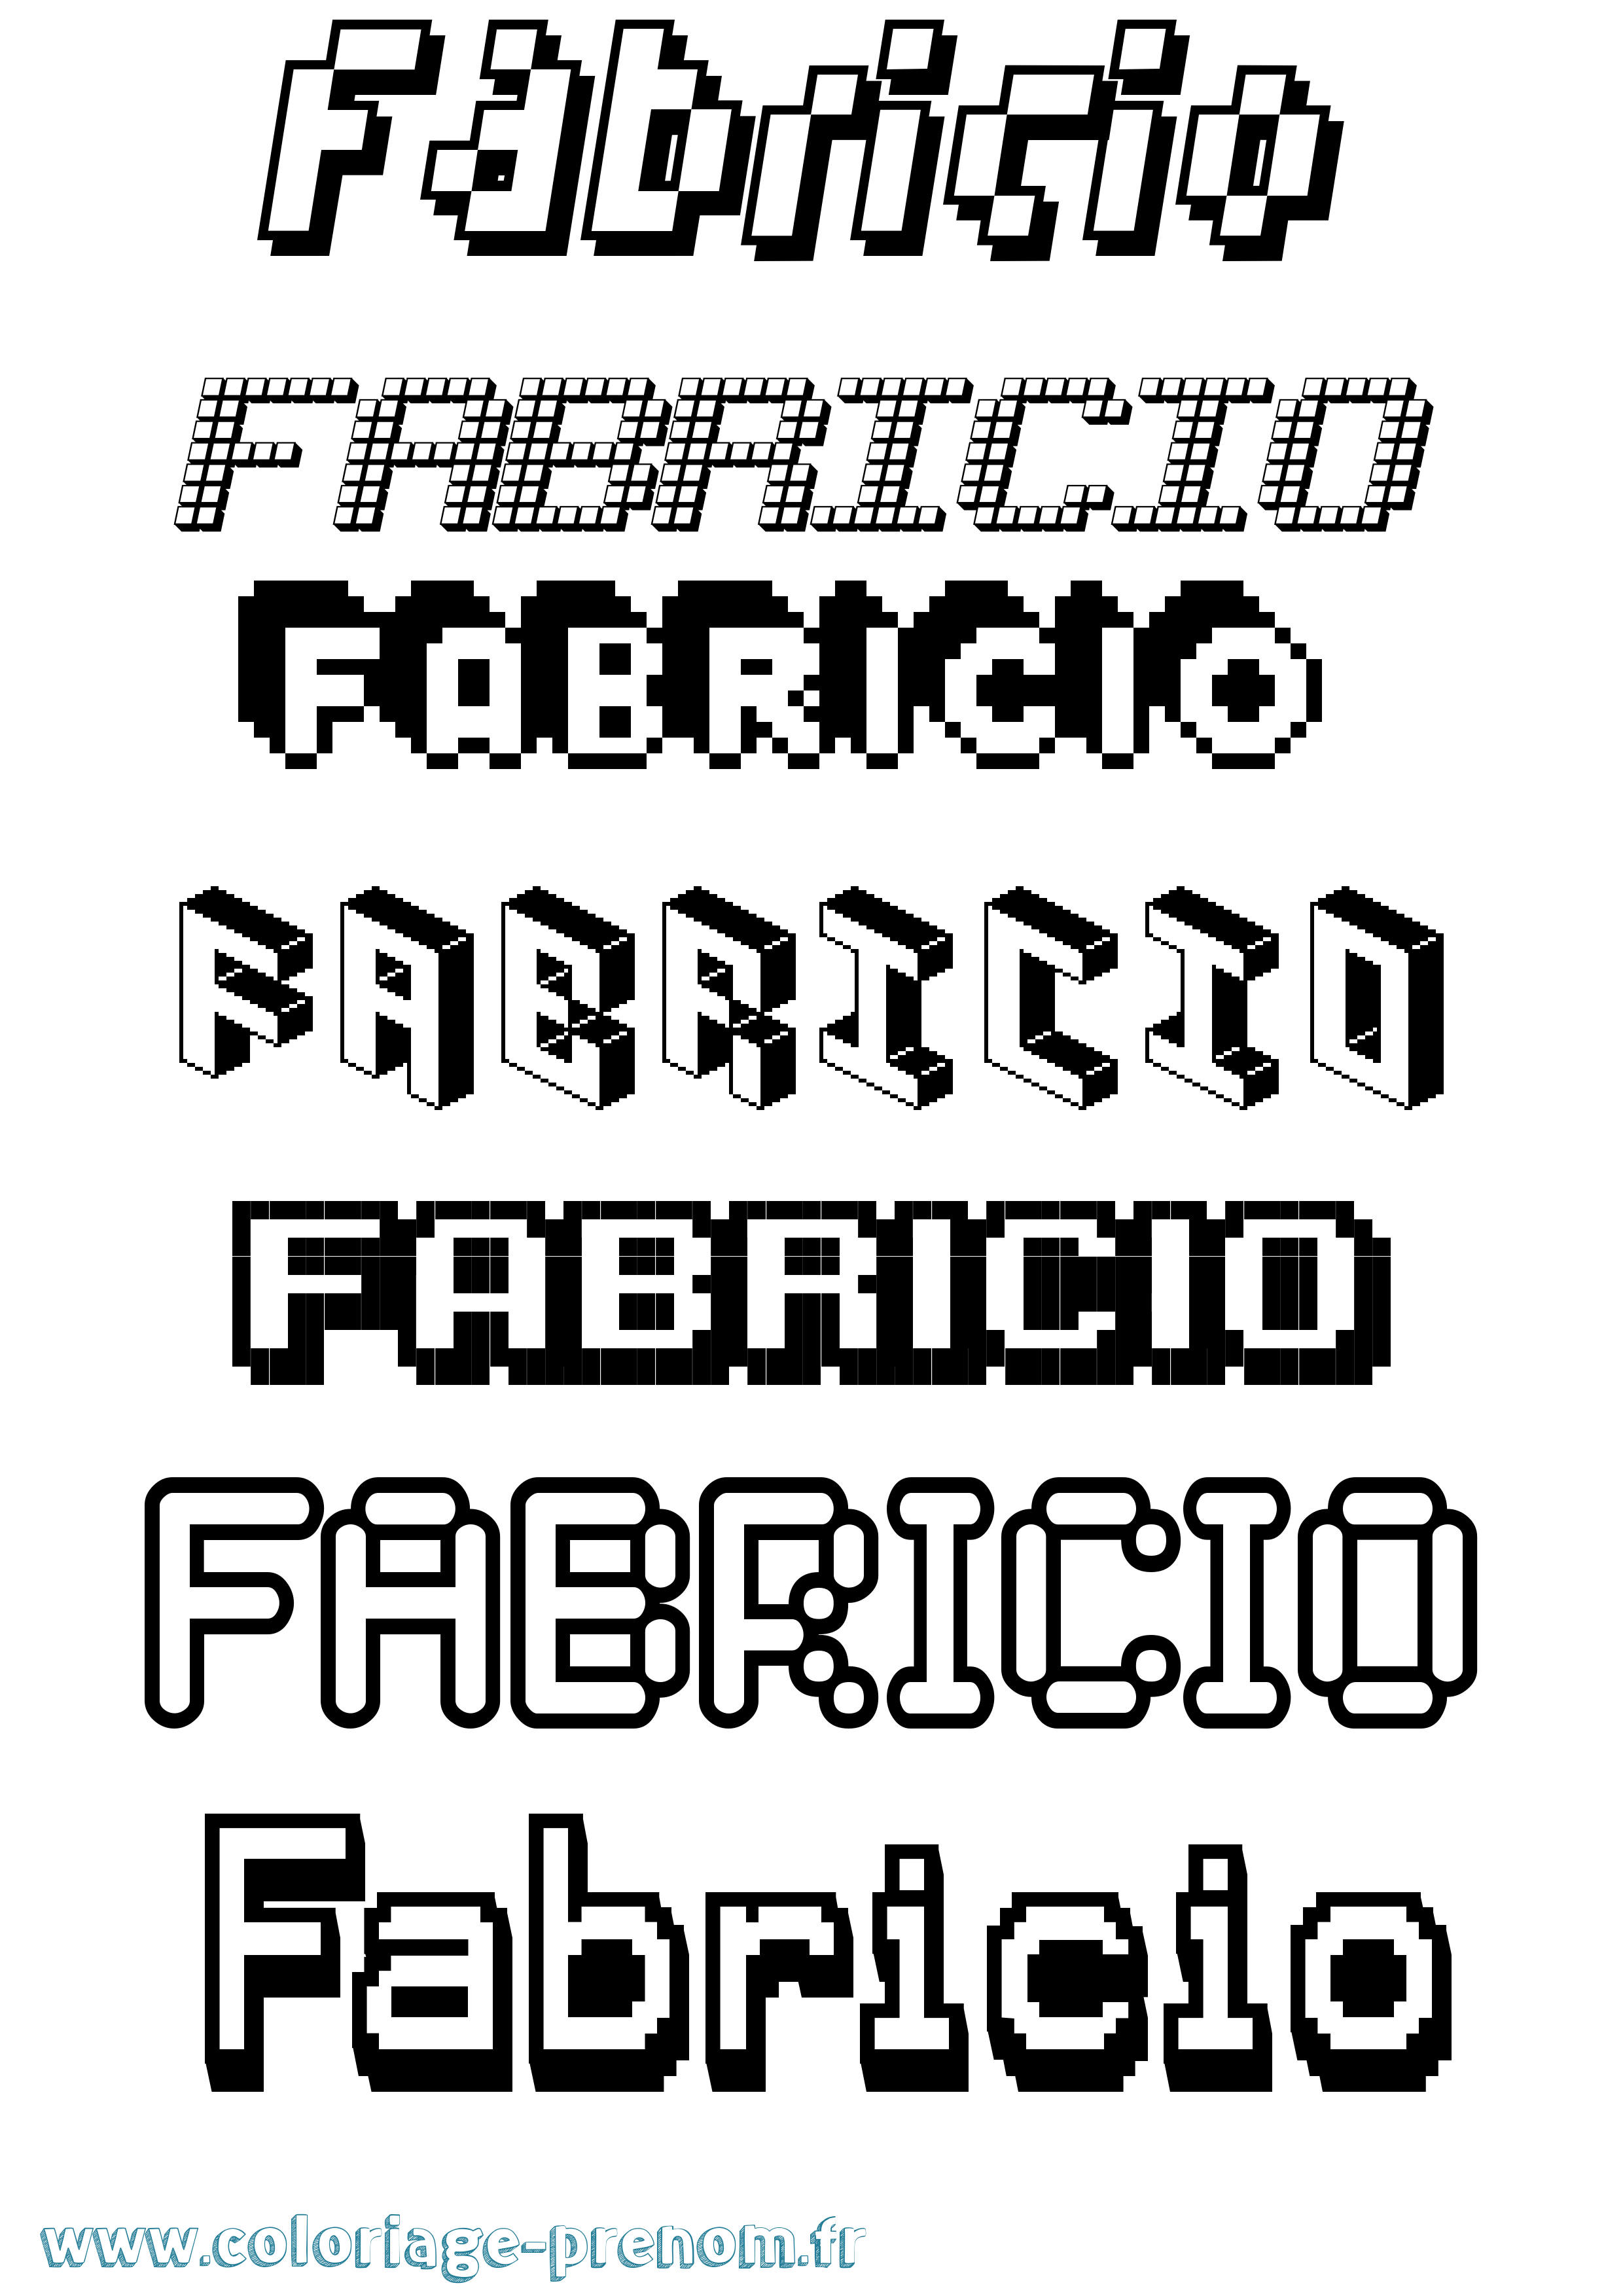 Coloriage prénom Fabricio Pixel